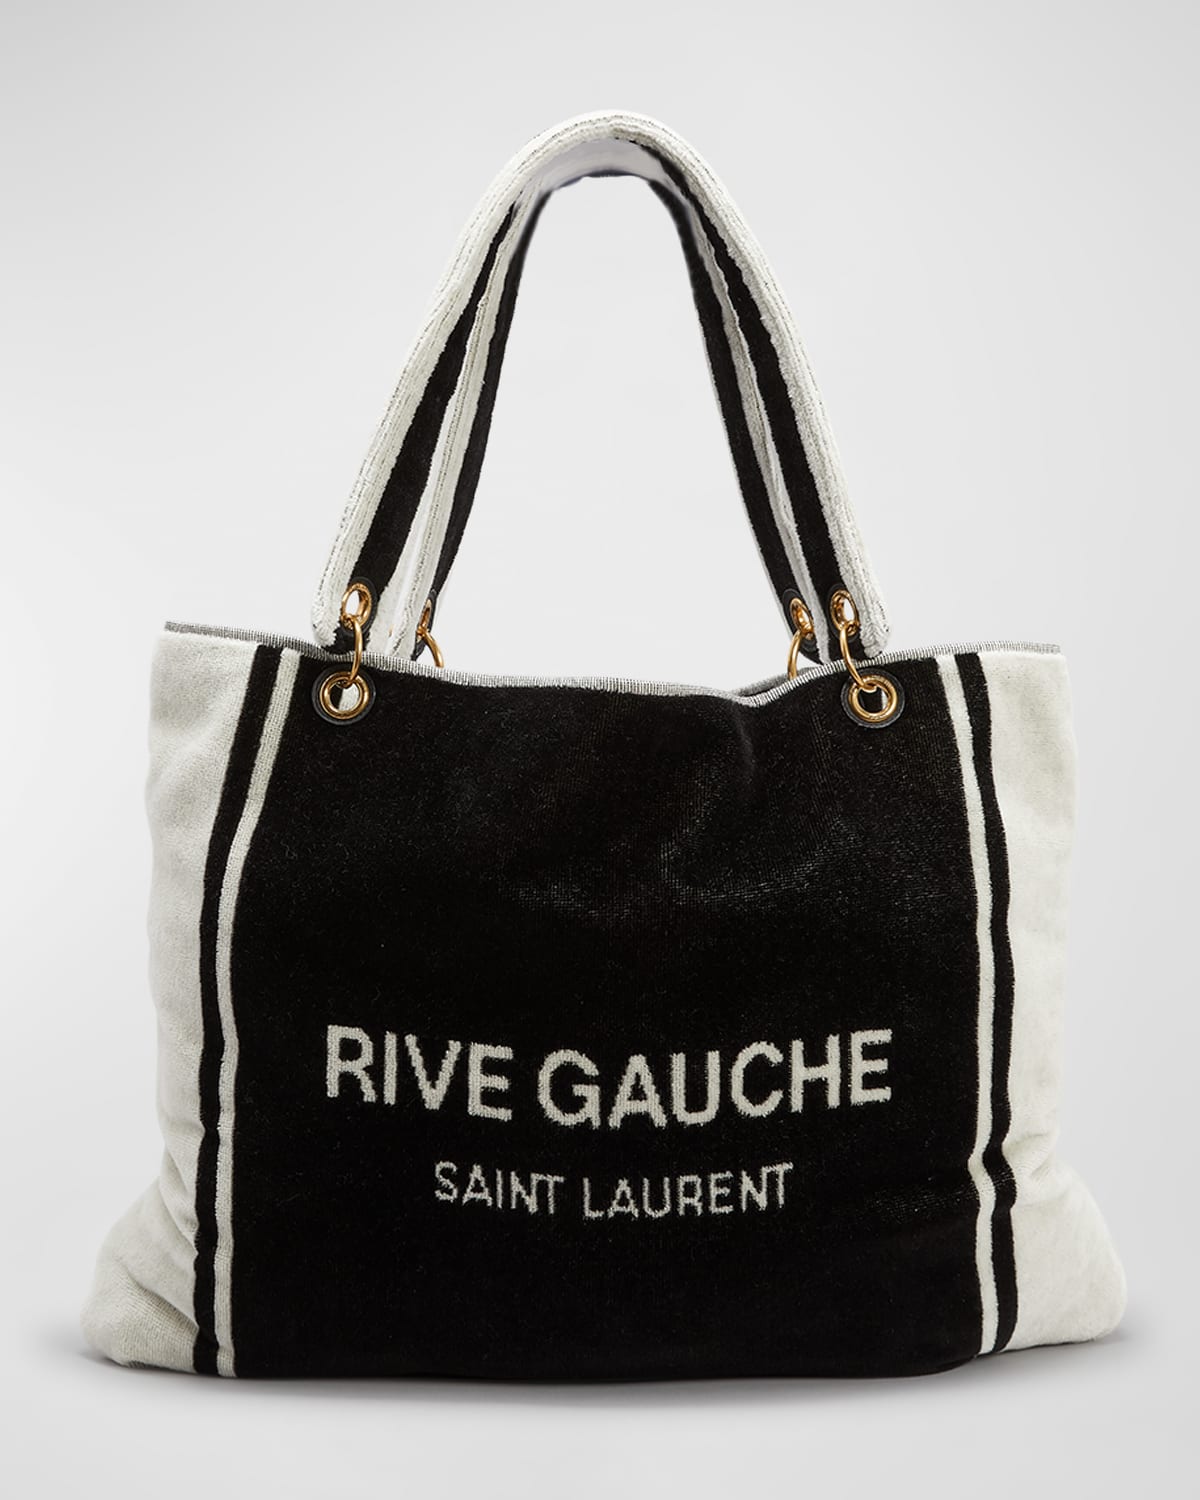 Saint Laurent Cabas Rive Gauche Towel Tote Bag In Black/white